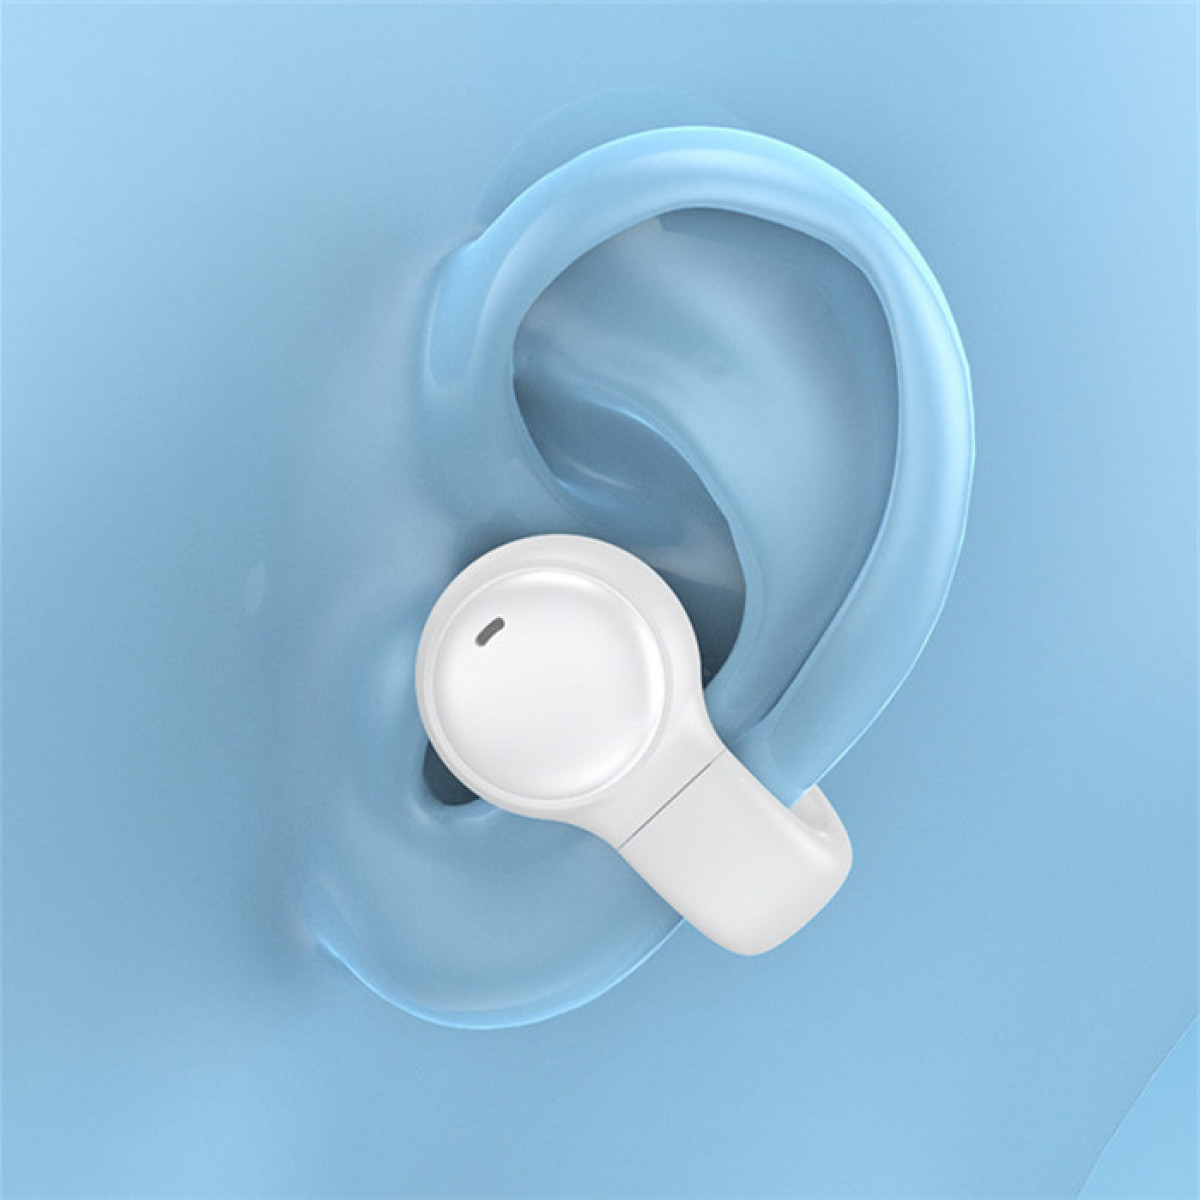 INF Ohrfreier Bluetooth Kopfhörer In-ear / 5.2, Weiß Knochenleitungskopfhörer